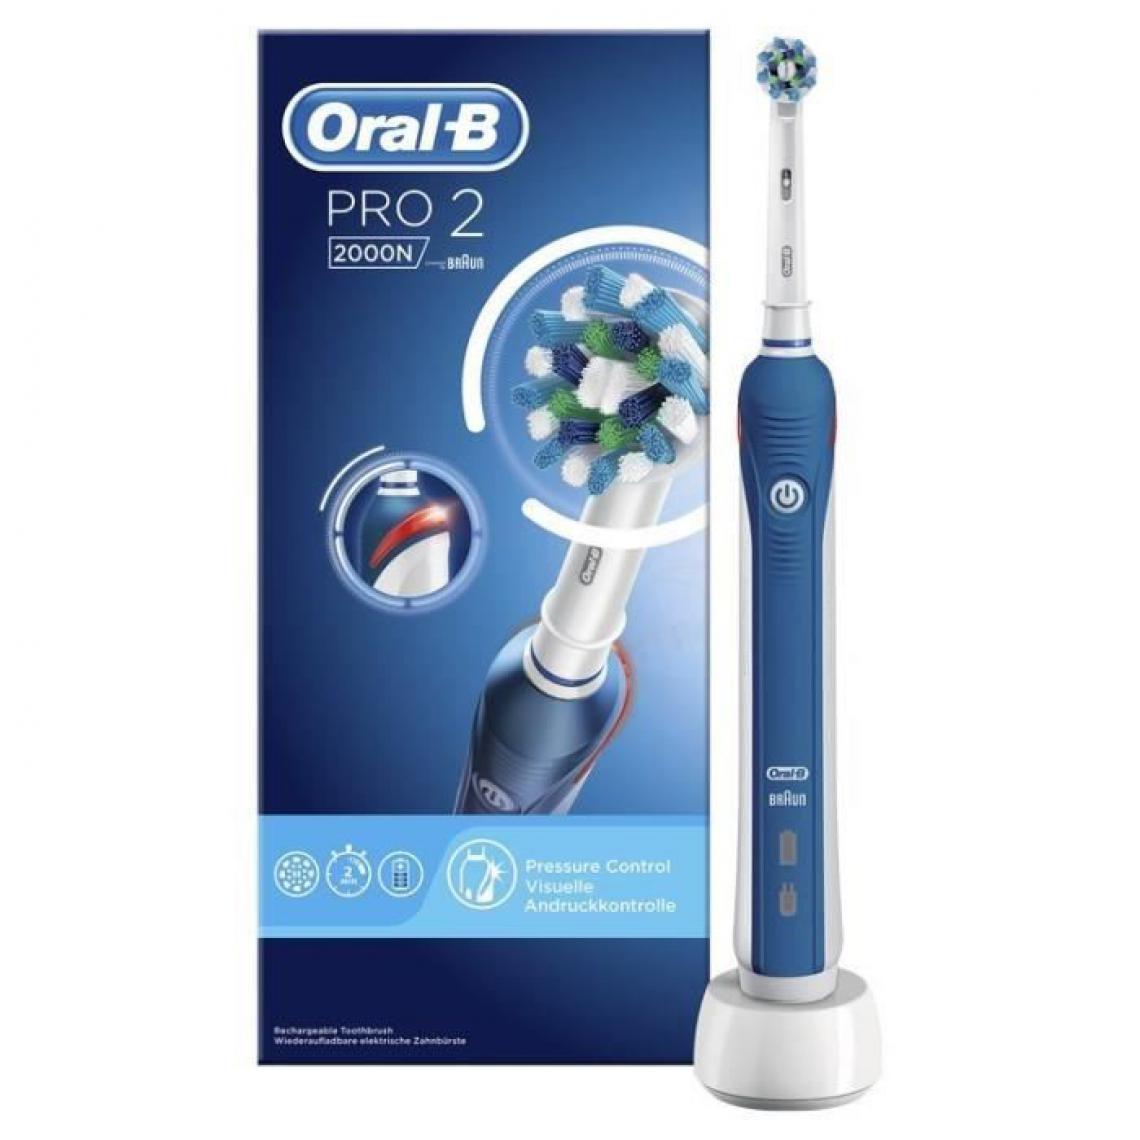 Oral-B - Oral-B PRO 2 2000N CrossAction Brosse a dents électrique par Braun - Brosse à dents électrique